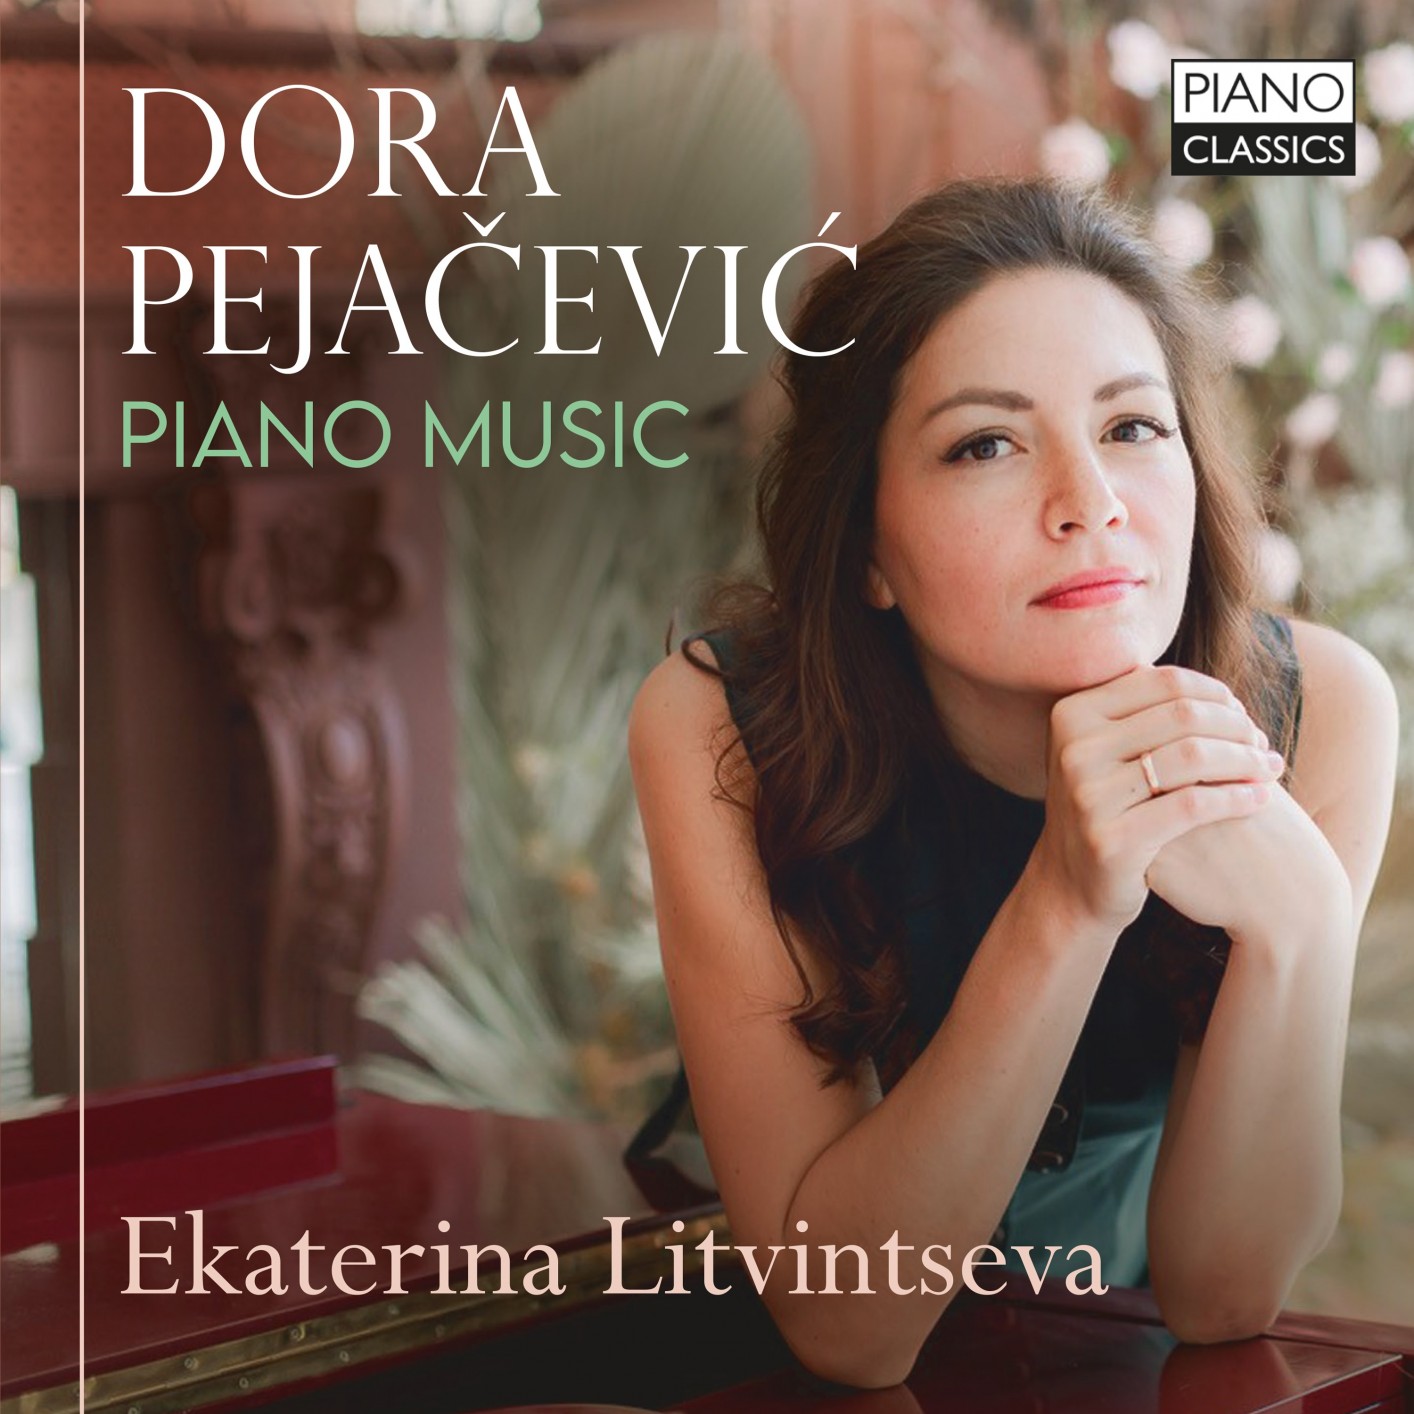 Ekatarina Litvintseva – Pejacevic Piano Music (2021) [FLAC 24bit/96kHz]